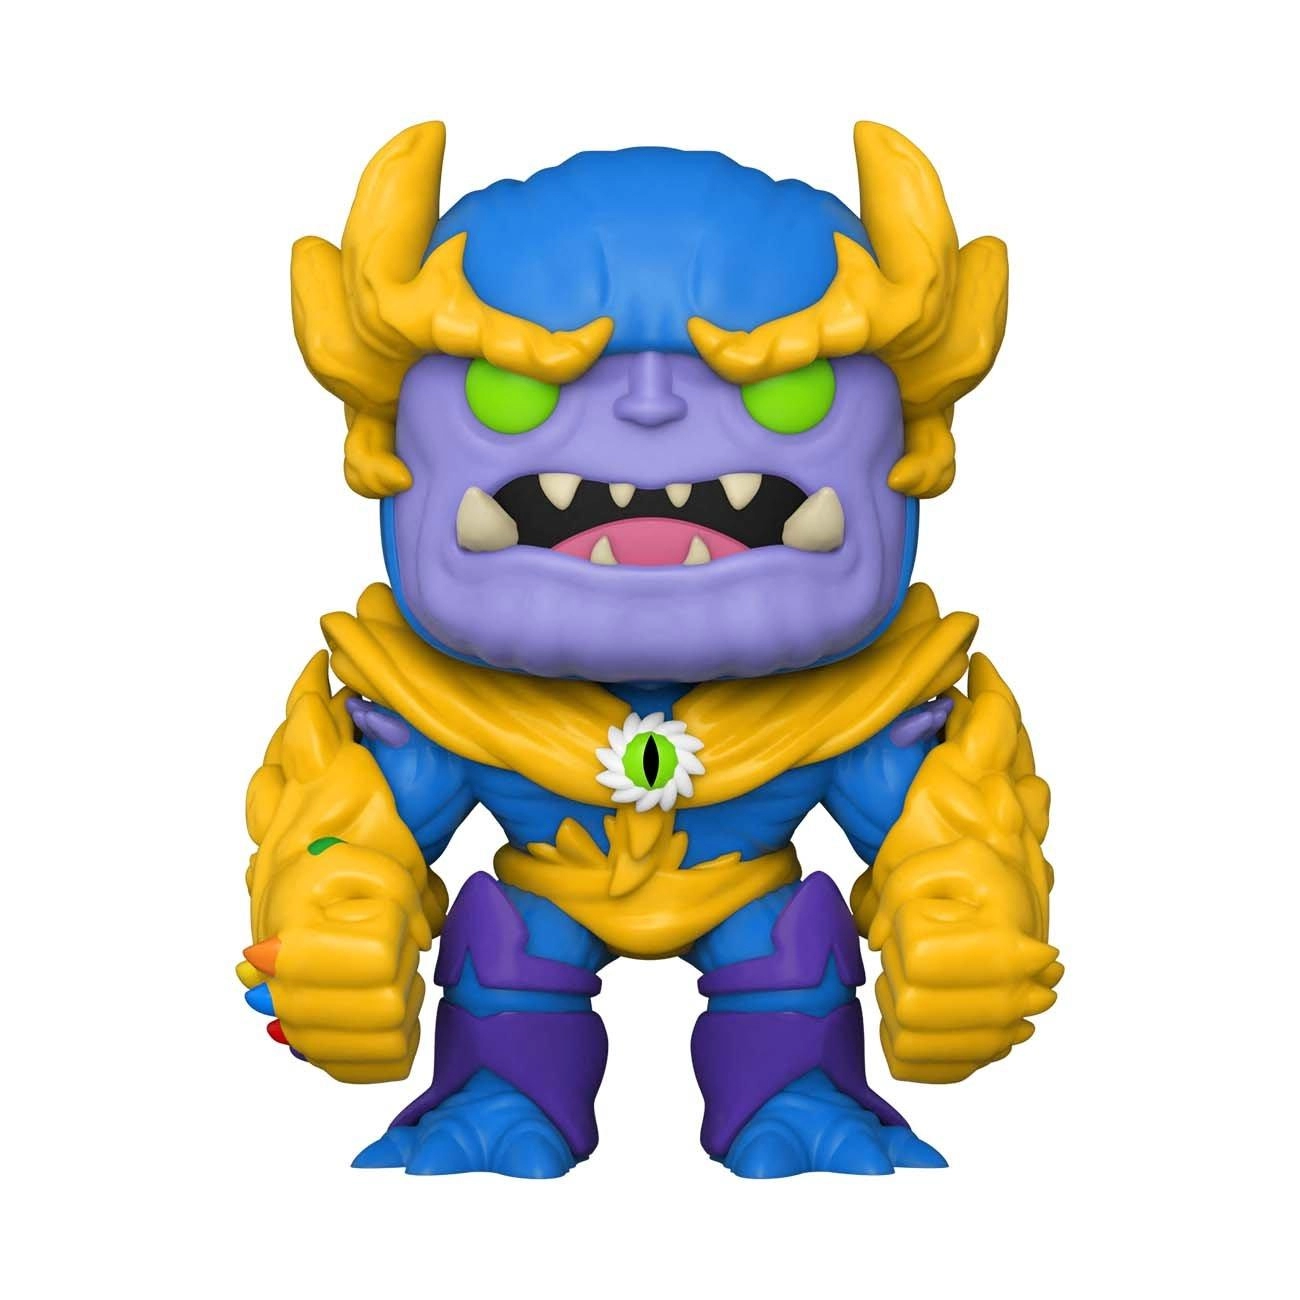 Funko Pop! Marvel: Monster Hunters - Thanos